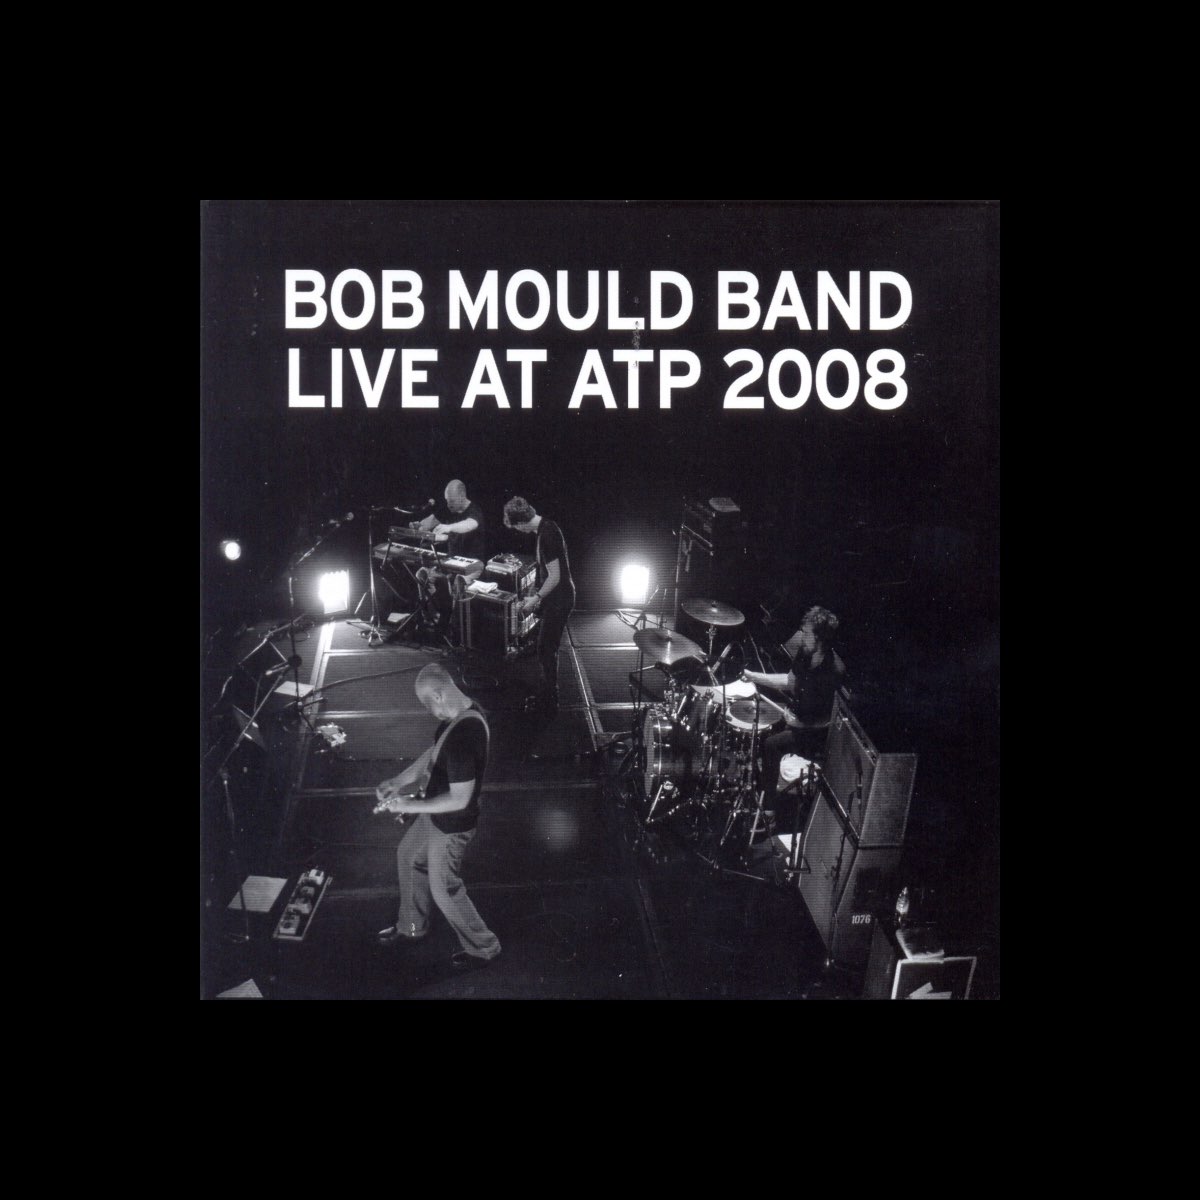 Live at ATP 2008 - Album by Bob Mould Band